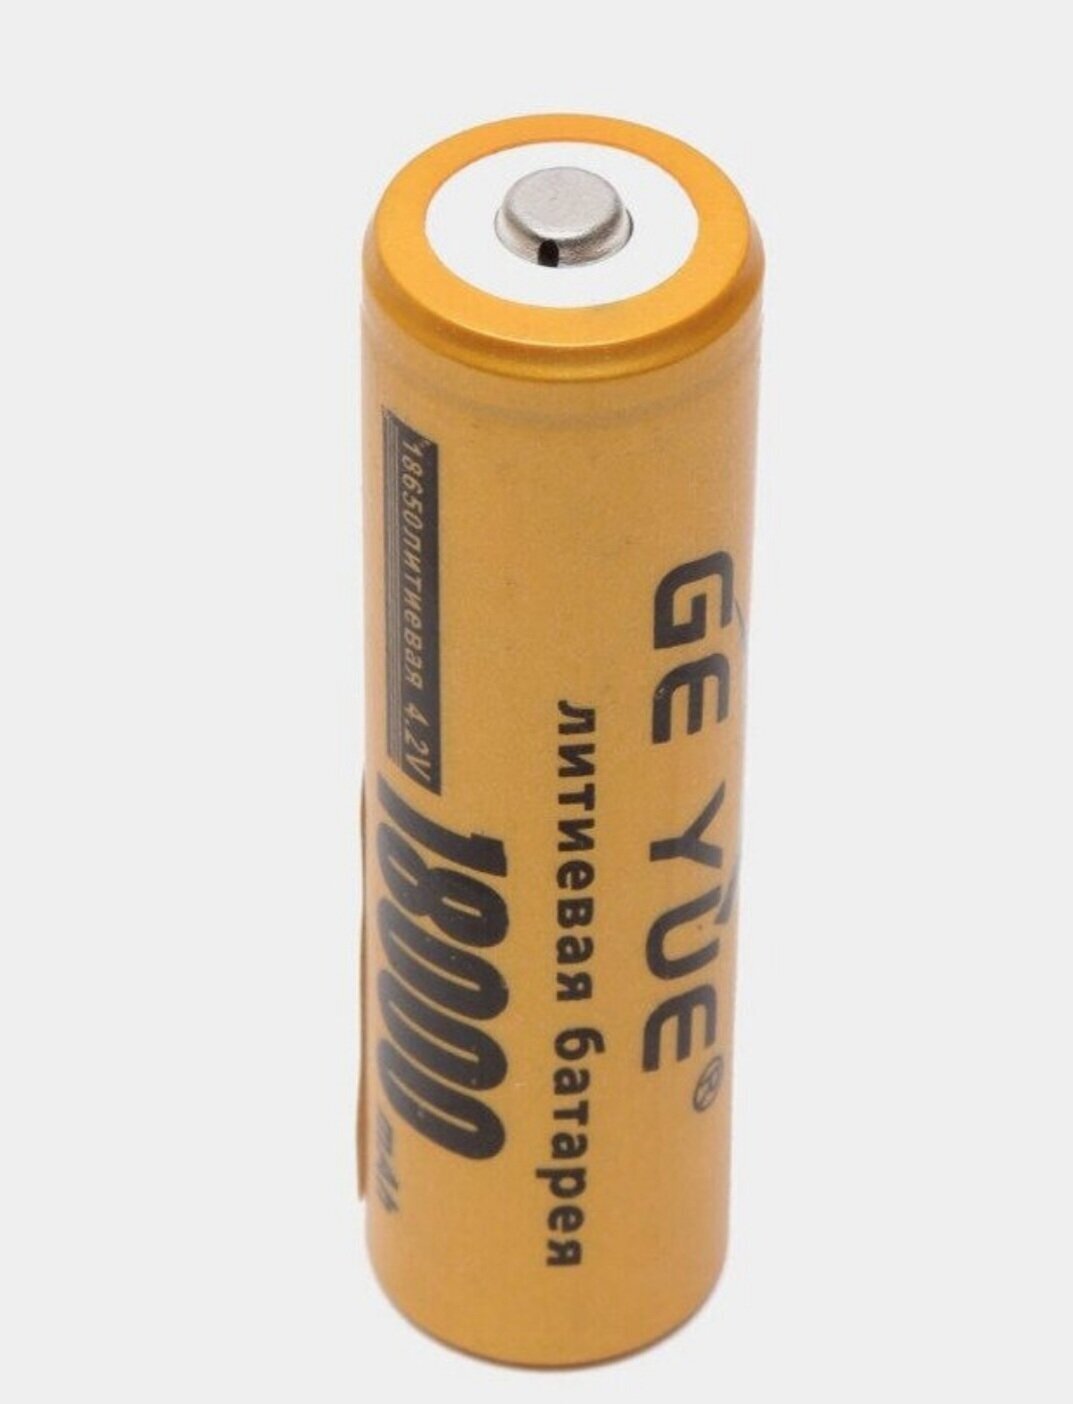 Аккумулятор литий-ионный GE YUE 18650 18000 мАч 4.2V, аккумуляторная литиевая батарея, комплект из 3-х штук